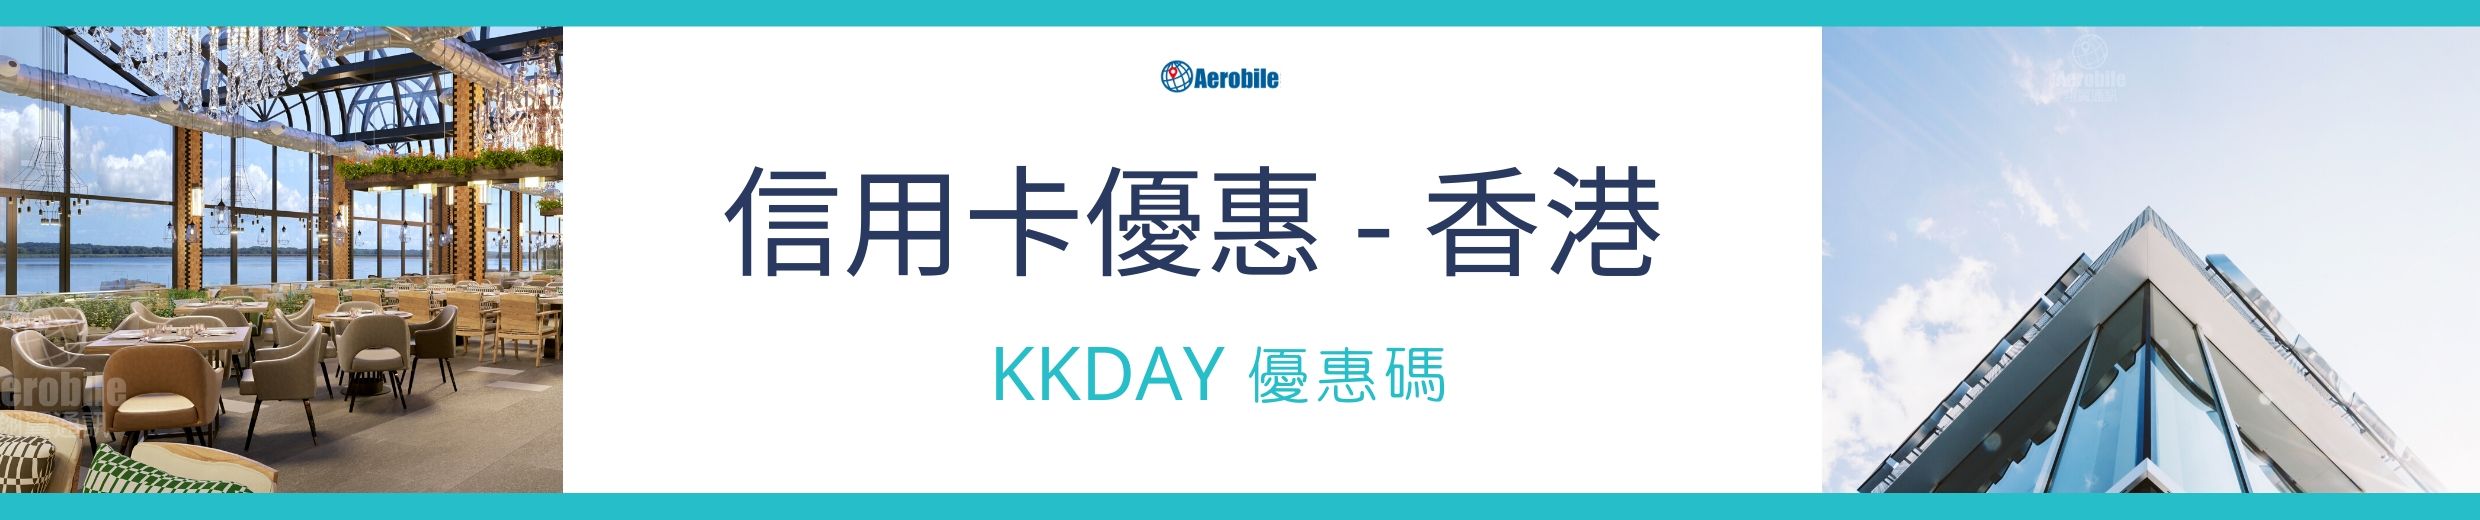 KKDAY-旅遊折扣碼-信用卡優惠 (香港)